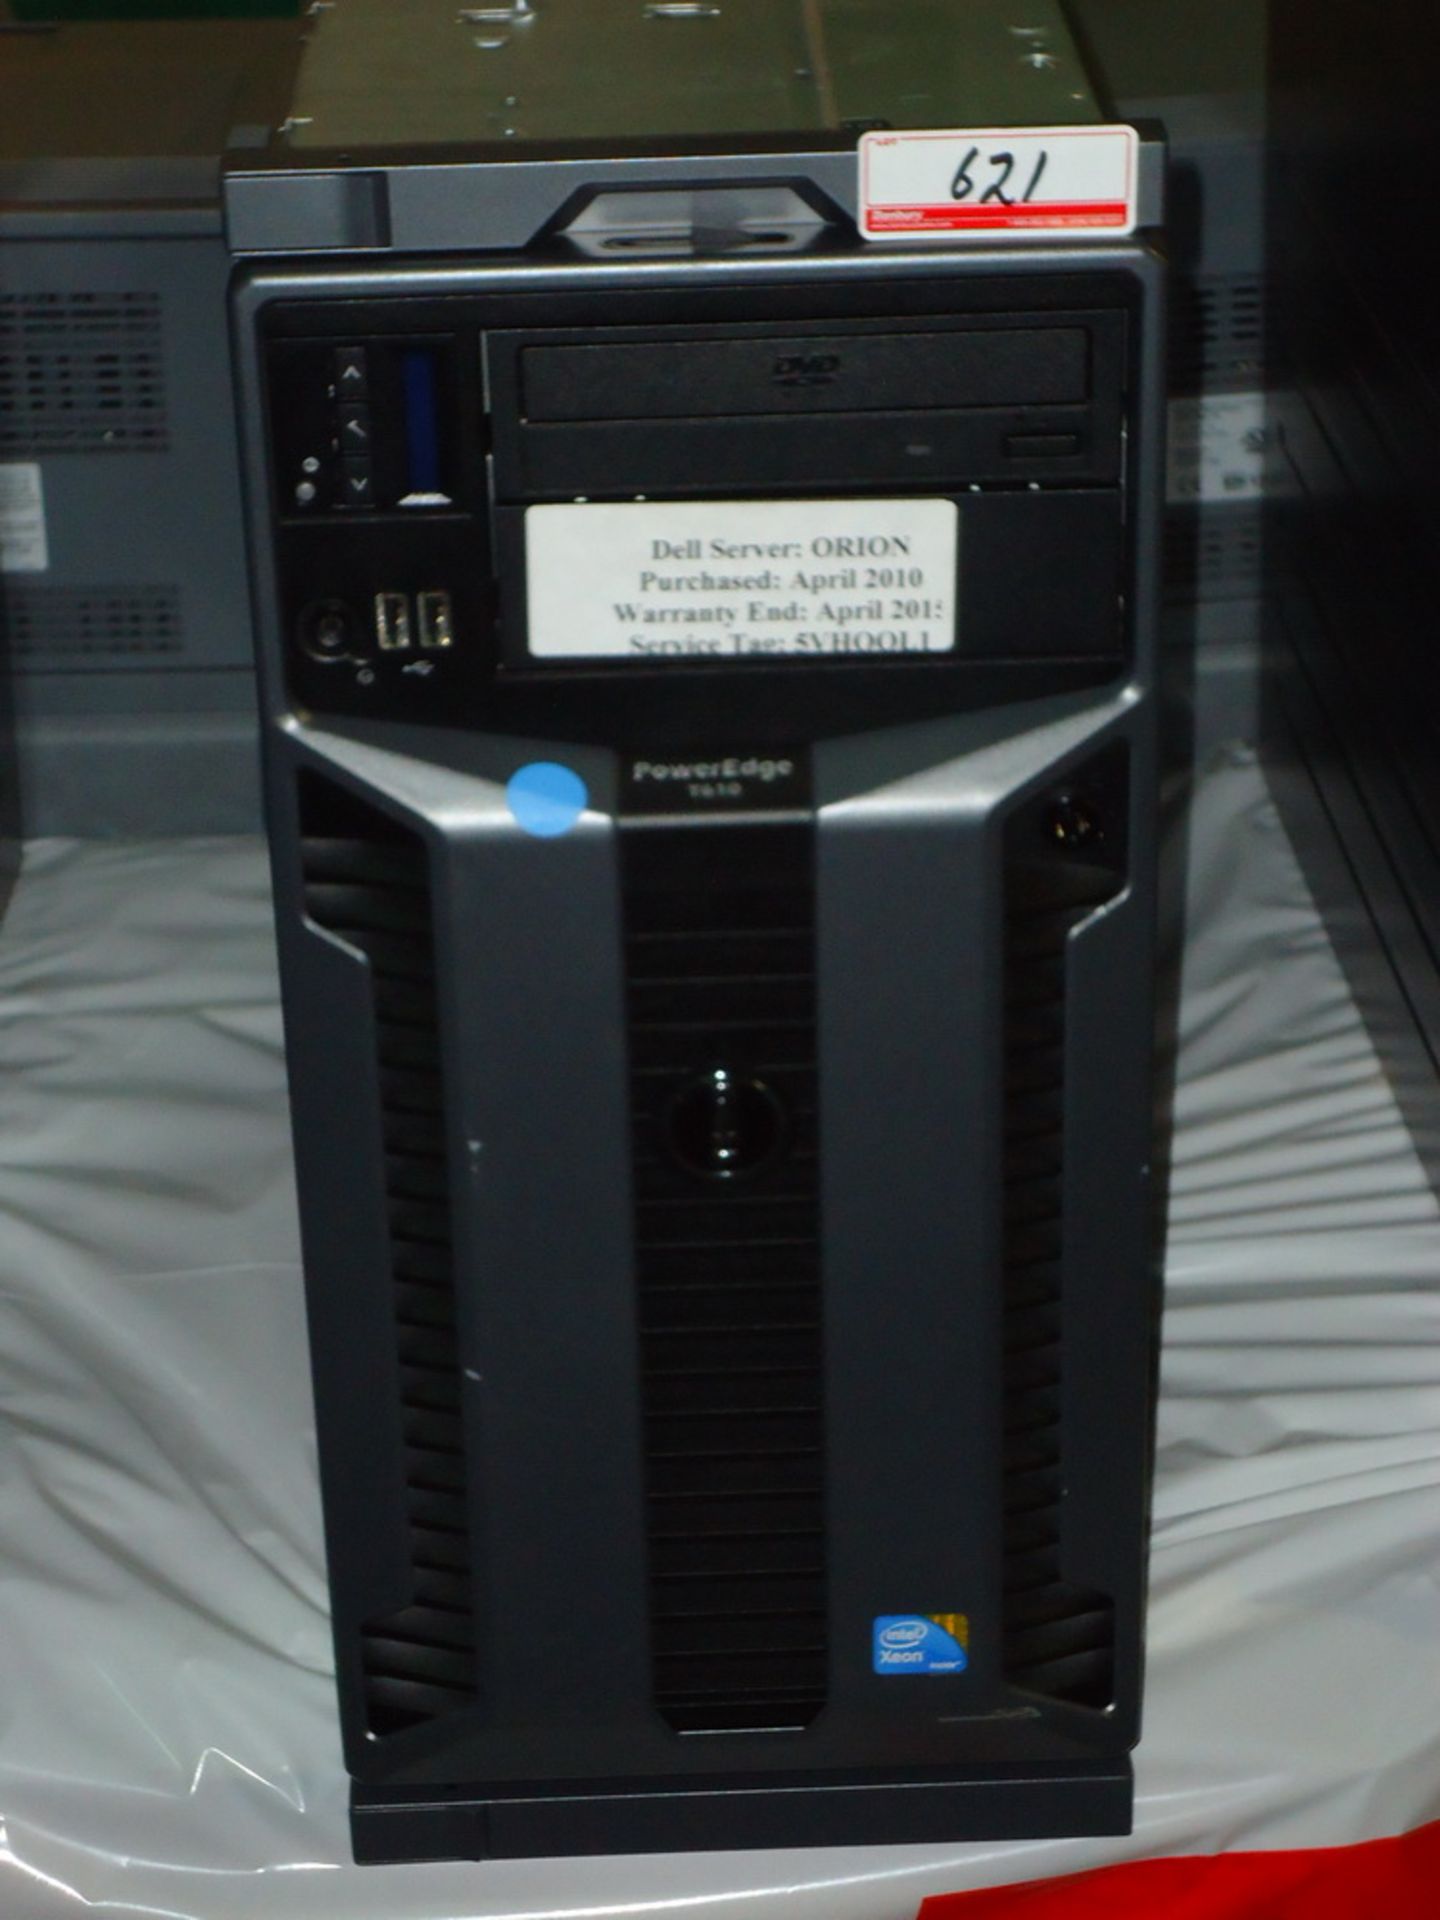 DELL POWEREDG T610 SERVER W/ INTEL XEON PENTIUM III 2.80GHZ PROCESSOR, 12 GB RAM (NO HDD)